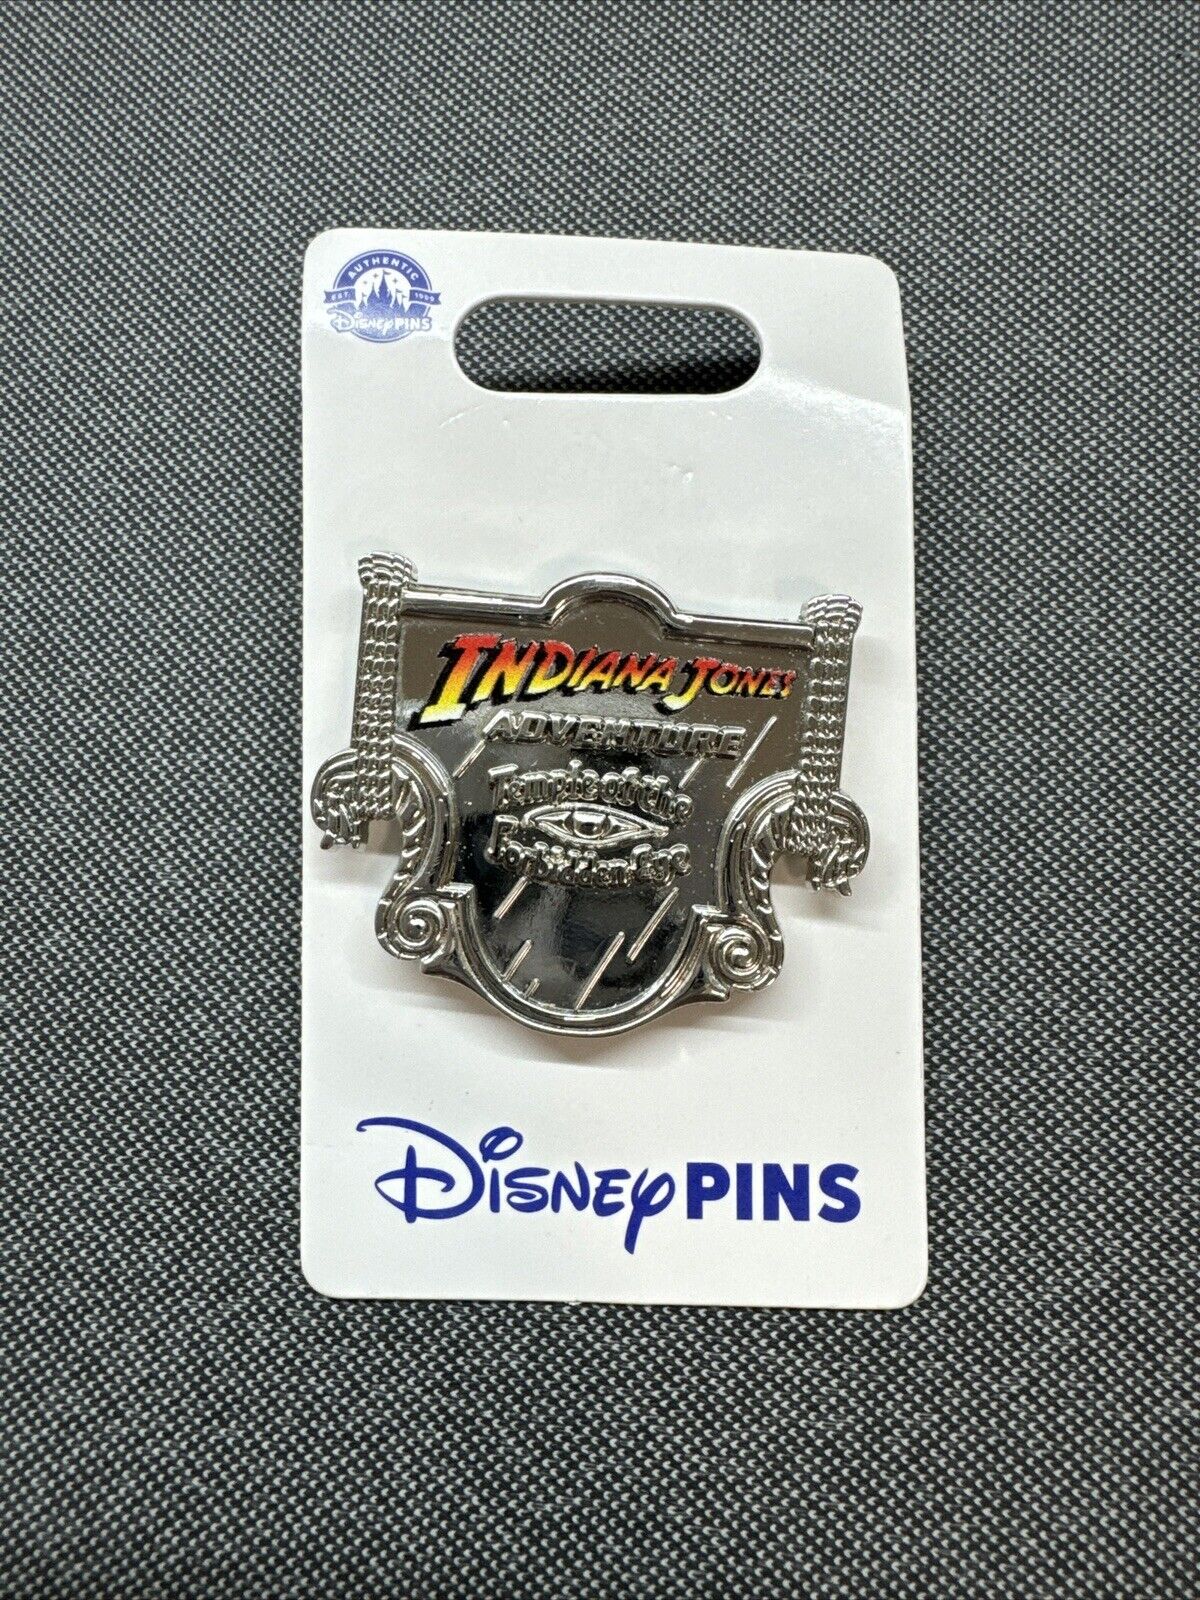 Disney Parks goofy as Indiana Jones on the run Pin Indiana jones attraction pin